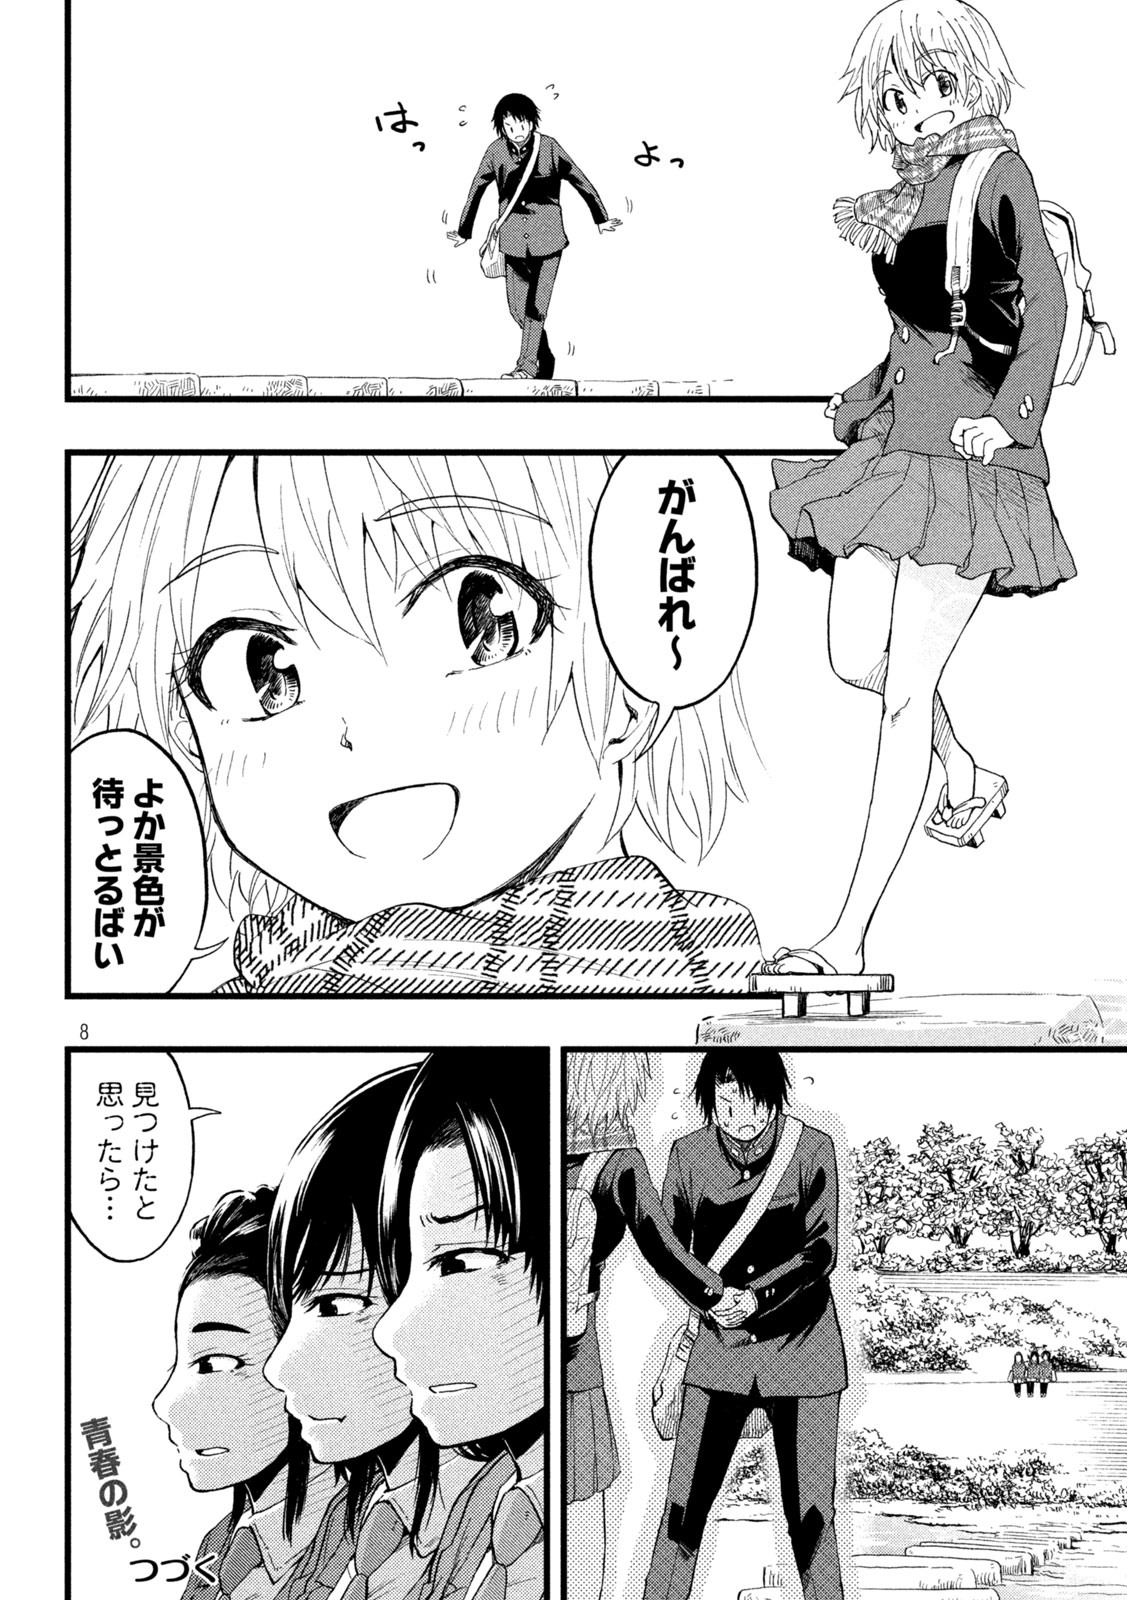 Koharu haru! - Chapter 66 - Page 4